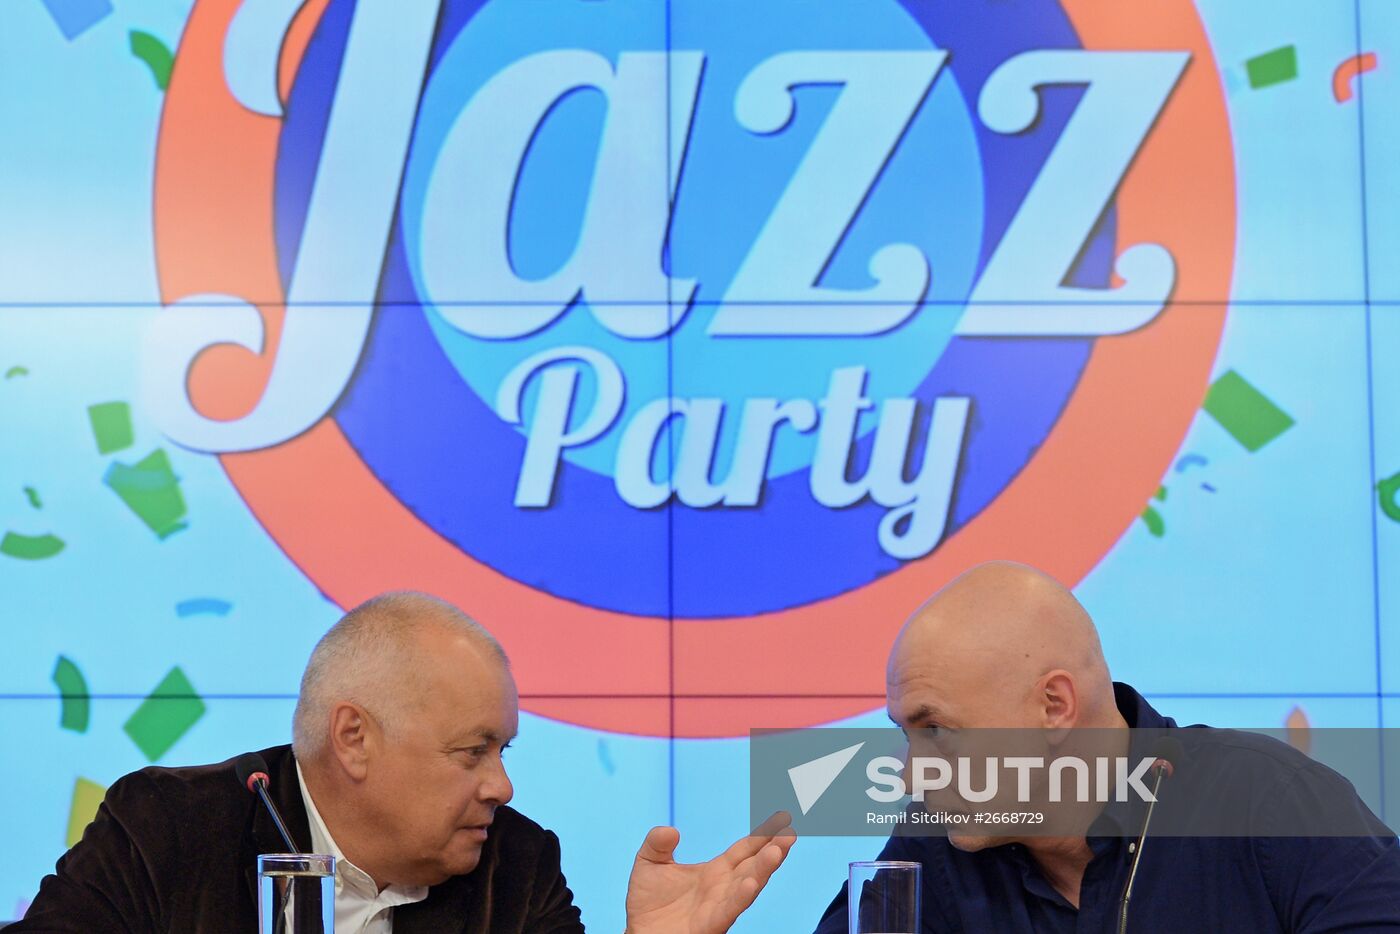 press conference on Koktebel jazz Party 2015